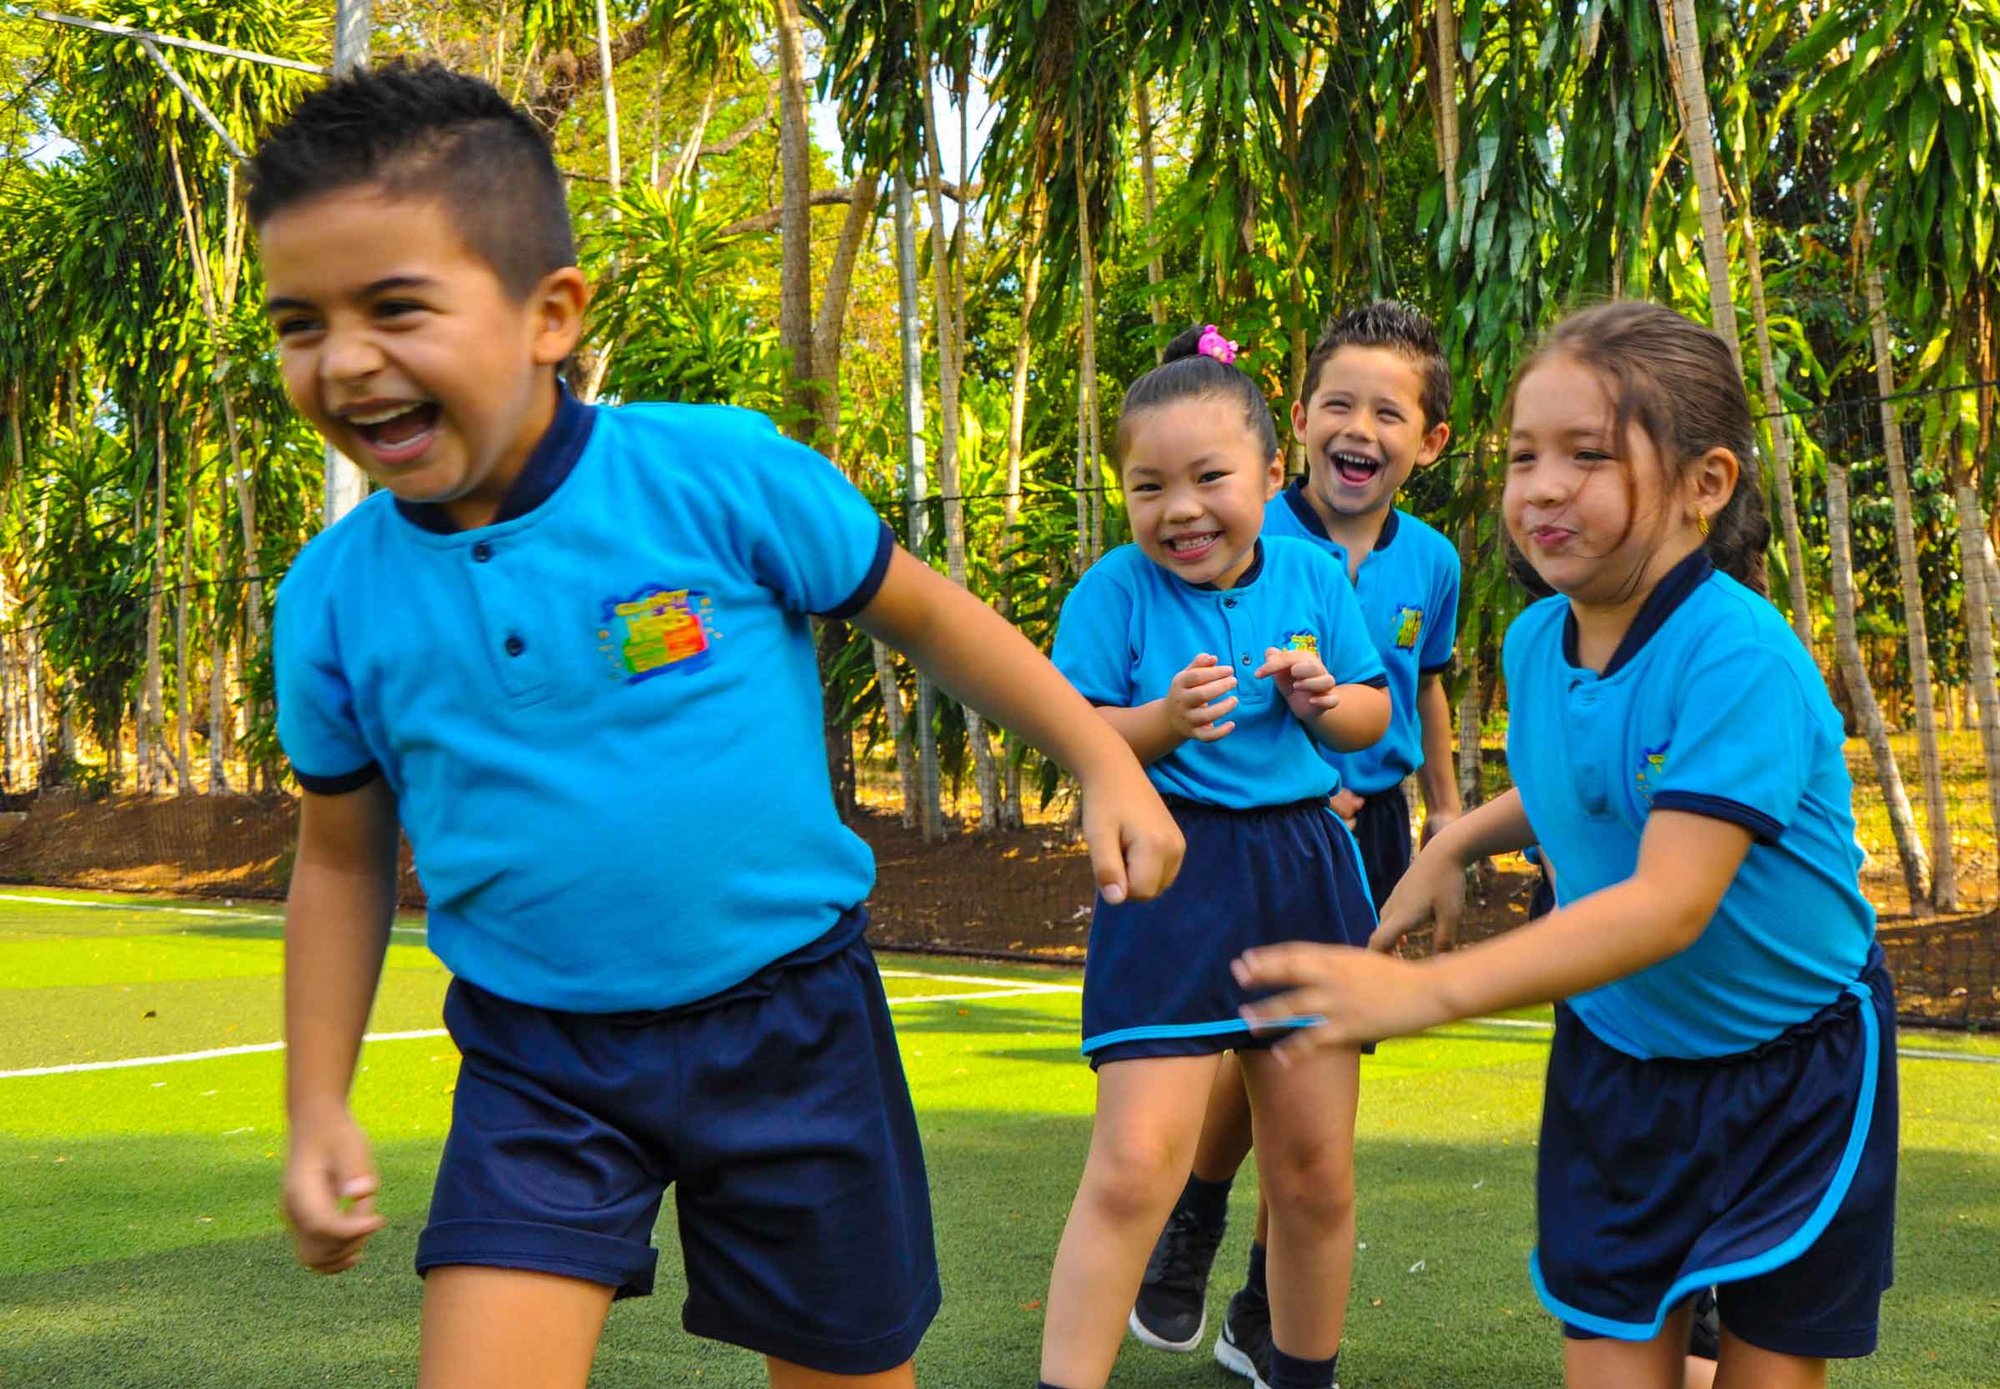 AIFS-Freiwilligenarbeit-Costa-Rica-Sports-Coaching-Kinder-Spielen-Freude